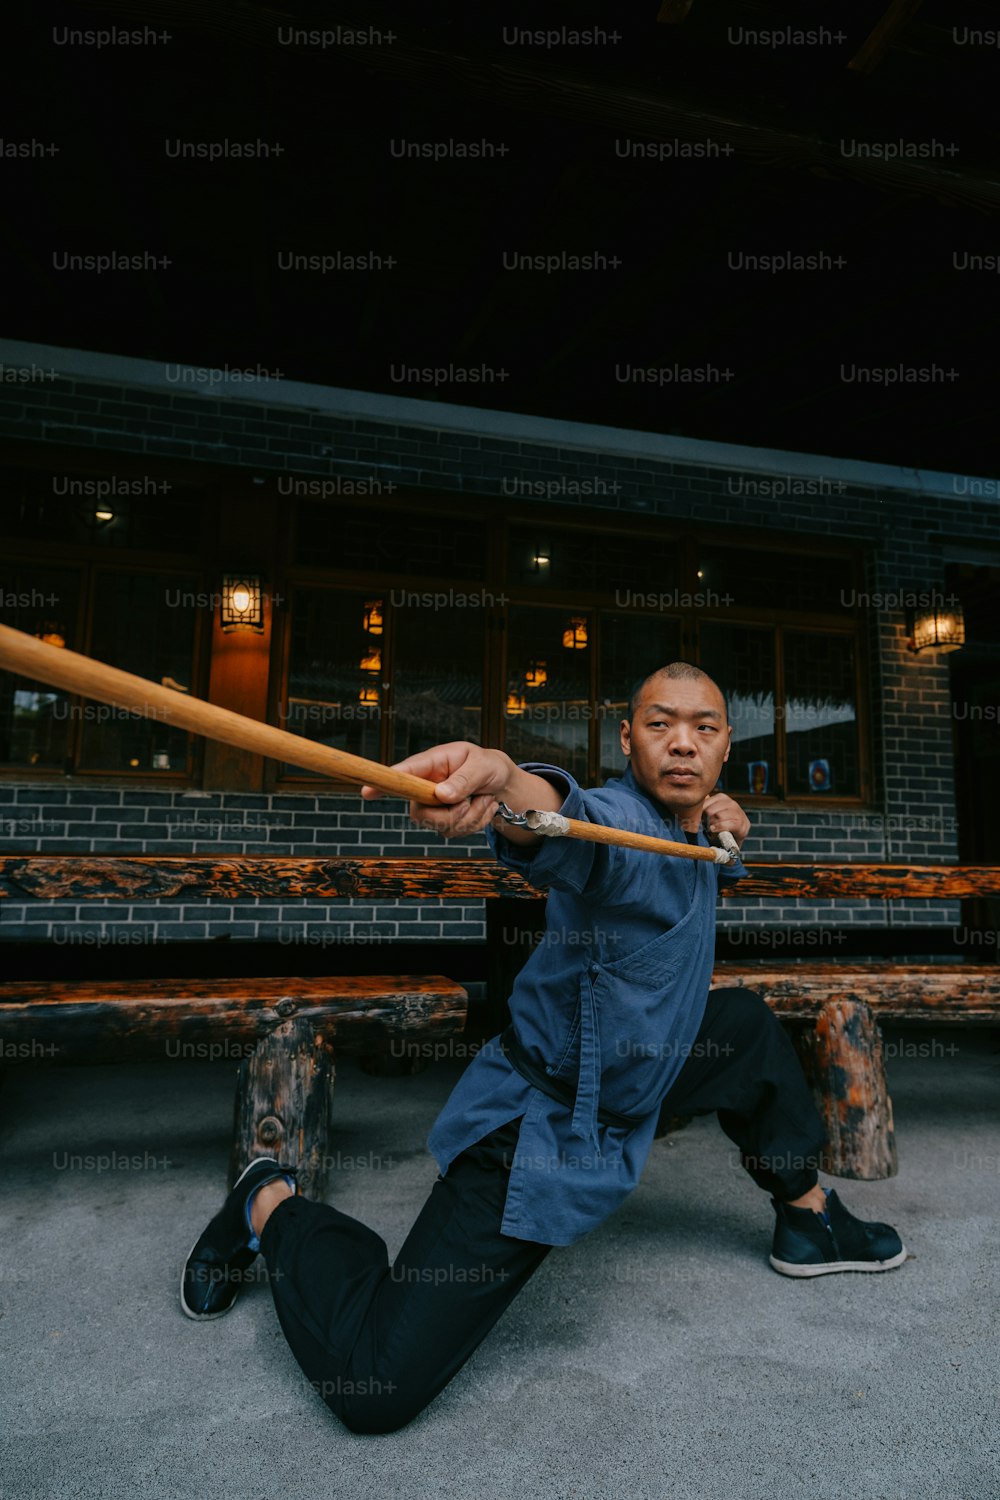 a man sitting on the ground holding a baseball bat